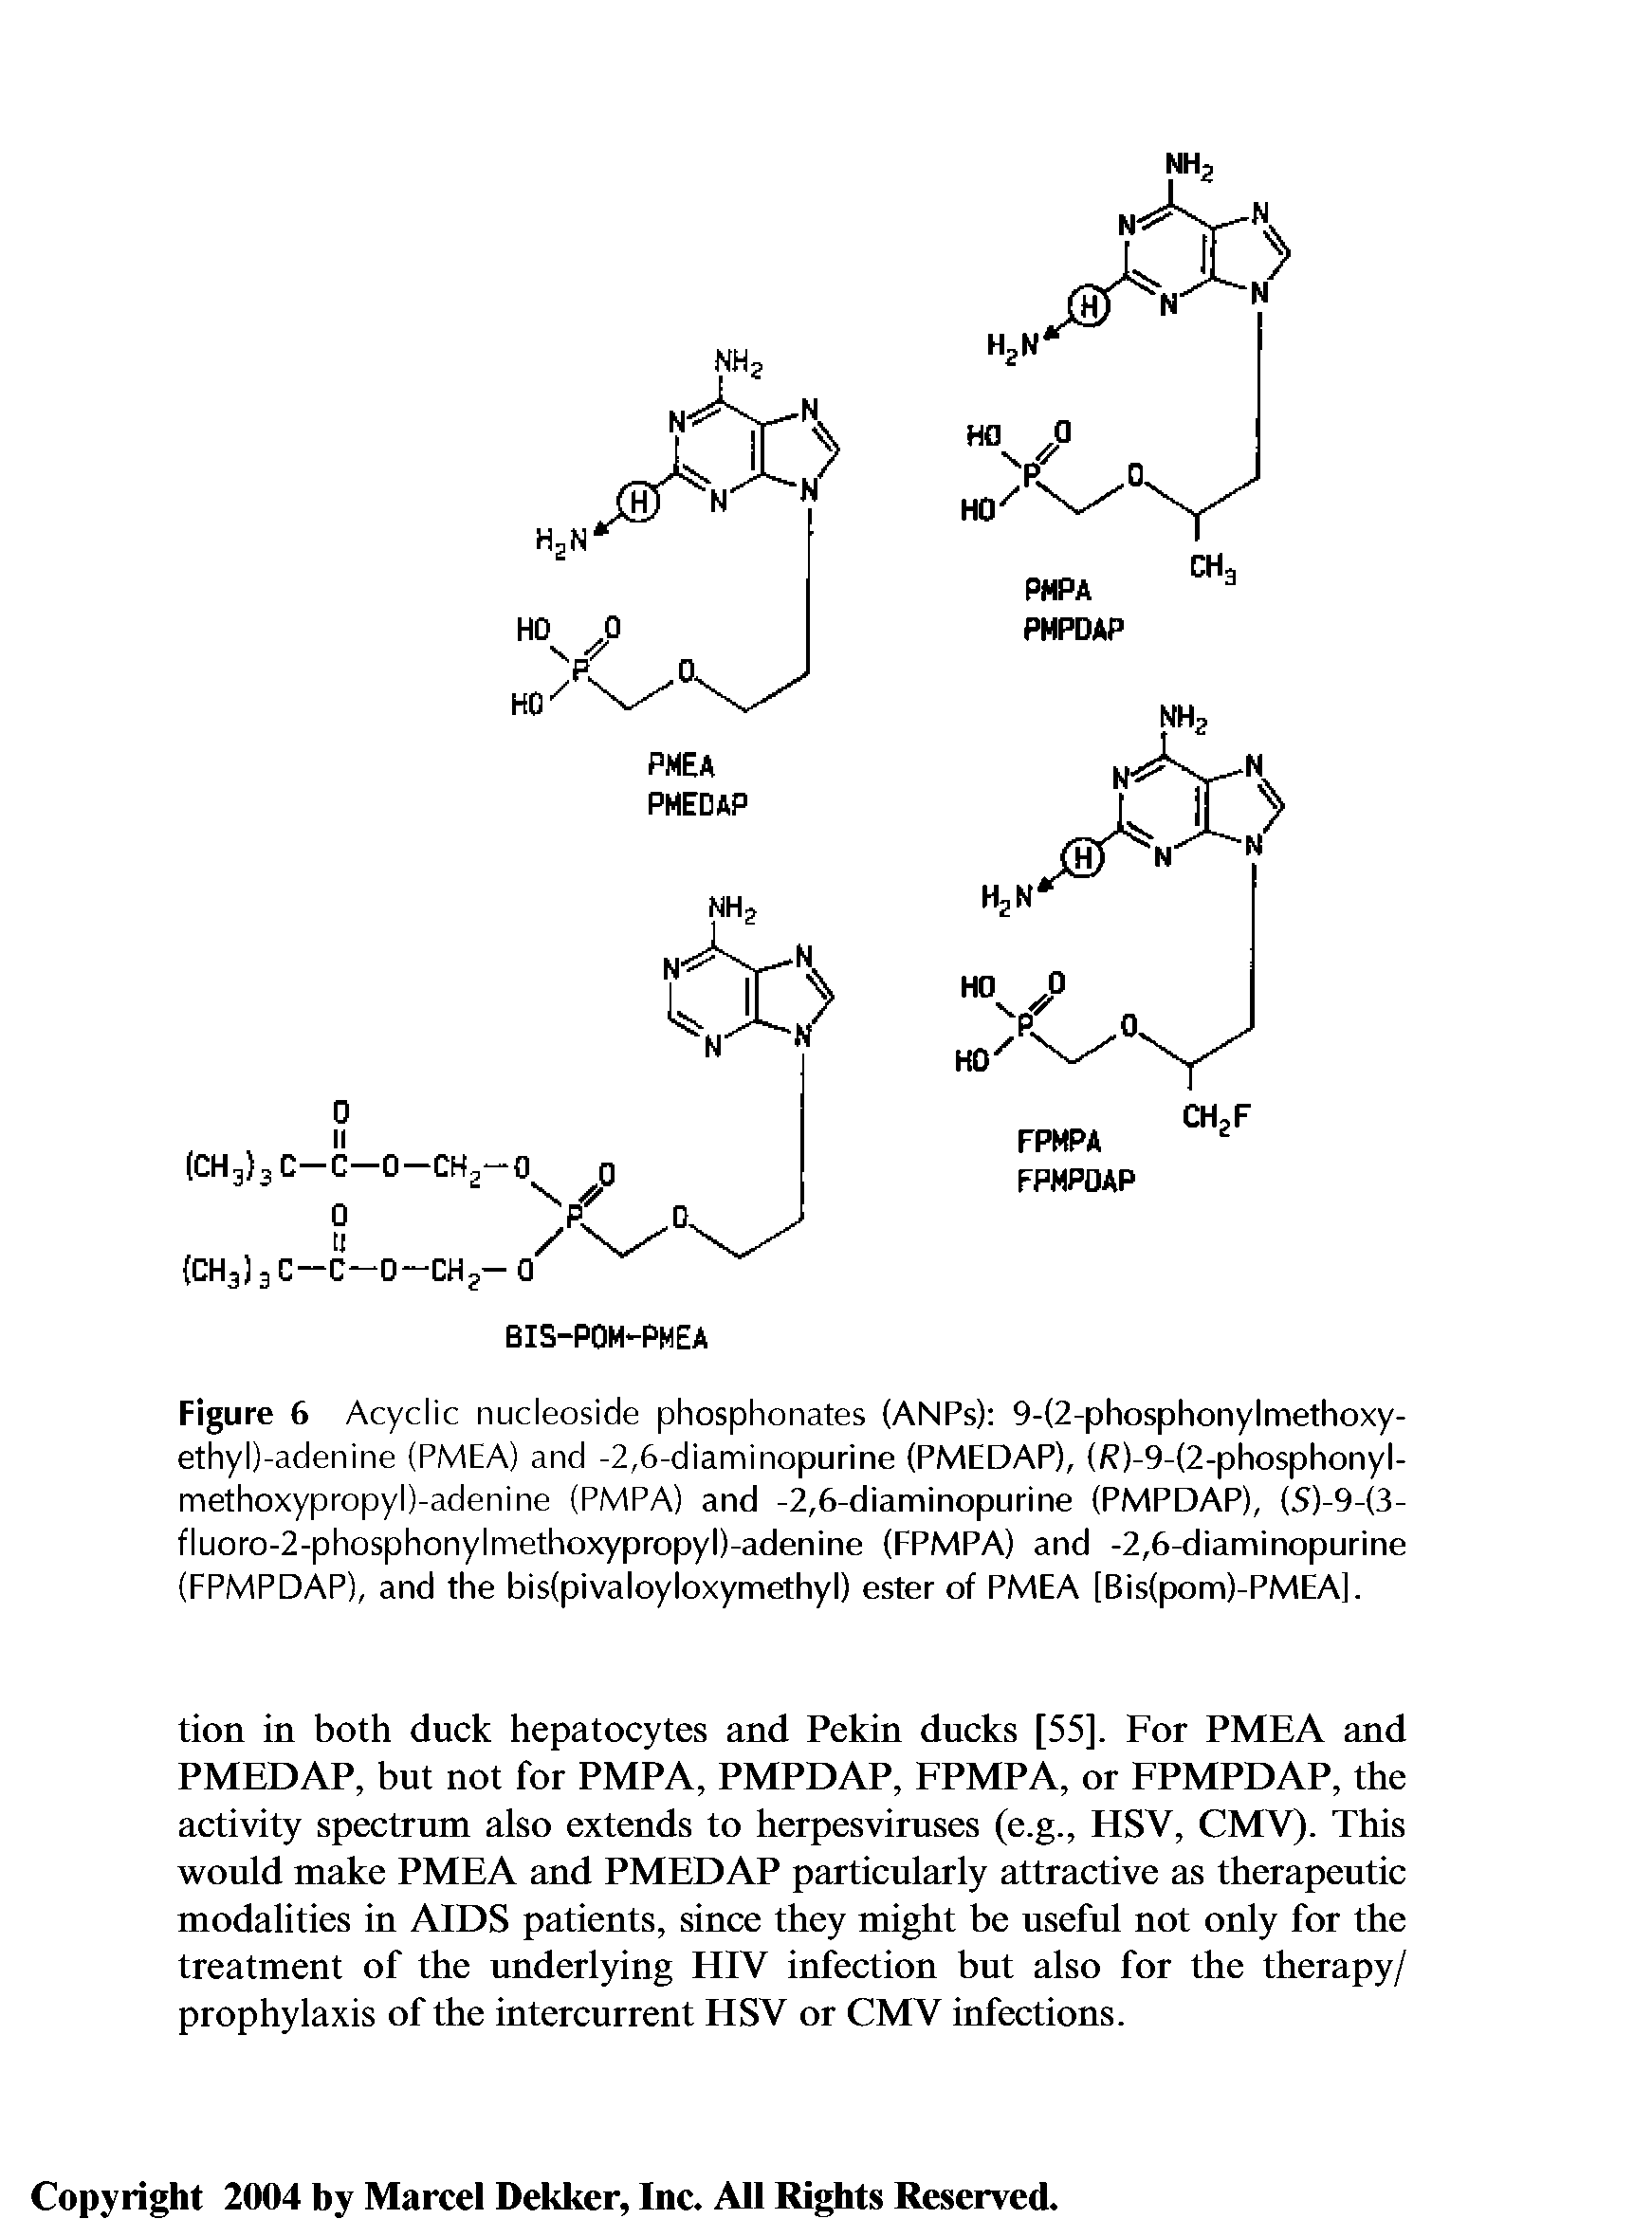 Figure 6 Acyclic nucleoside phosphonates (ANPs) 9-(2-phosphonylmethoxy-ethyl)-adenine (PMEA) and -2,6-diaminopurine (PMEDAP), (R)-9-(2-phosphonyl-methoxypropyl)-adenine (PMPA) and -2,6-diaminopurine (PMPDAP), (5)-9-(3-fluoro-2-phosphonylmethoxypropyl)-adenine (FPMPA) and -2,6-diaminopurine (FPMPDAP), and the bis(pivaloyloxymethyl) ester of PMEA [Bis(pom)-PMEA].